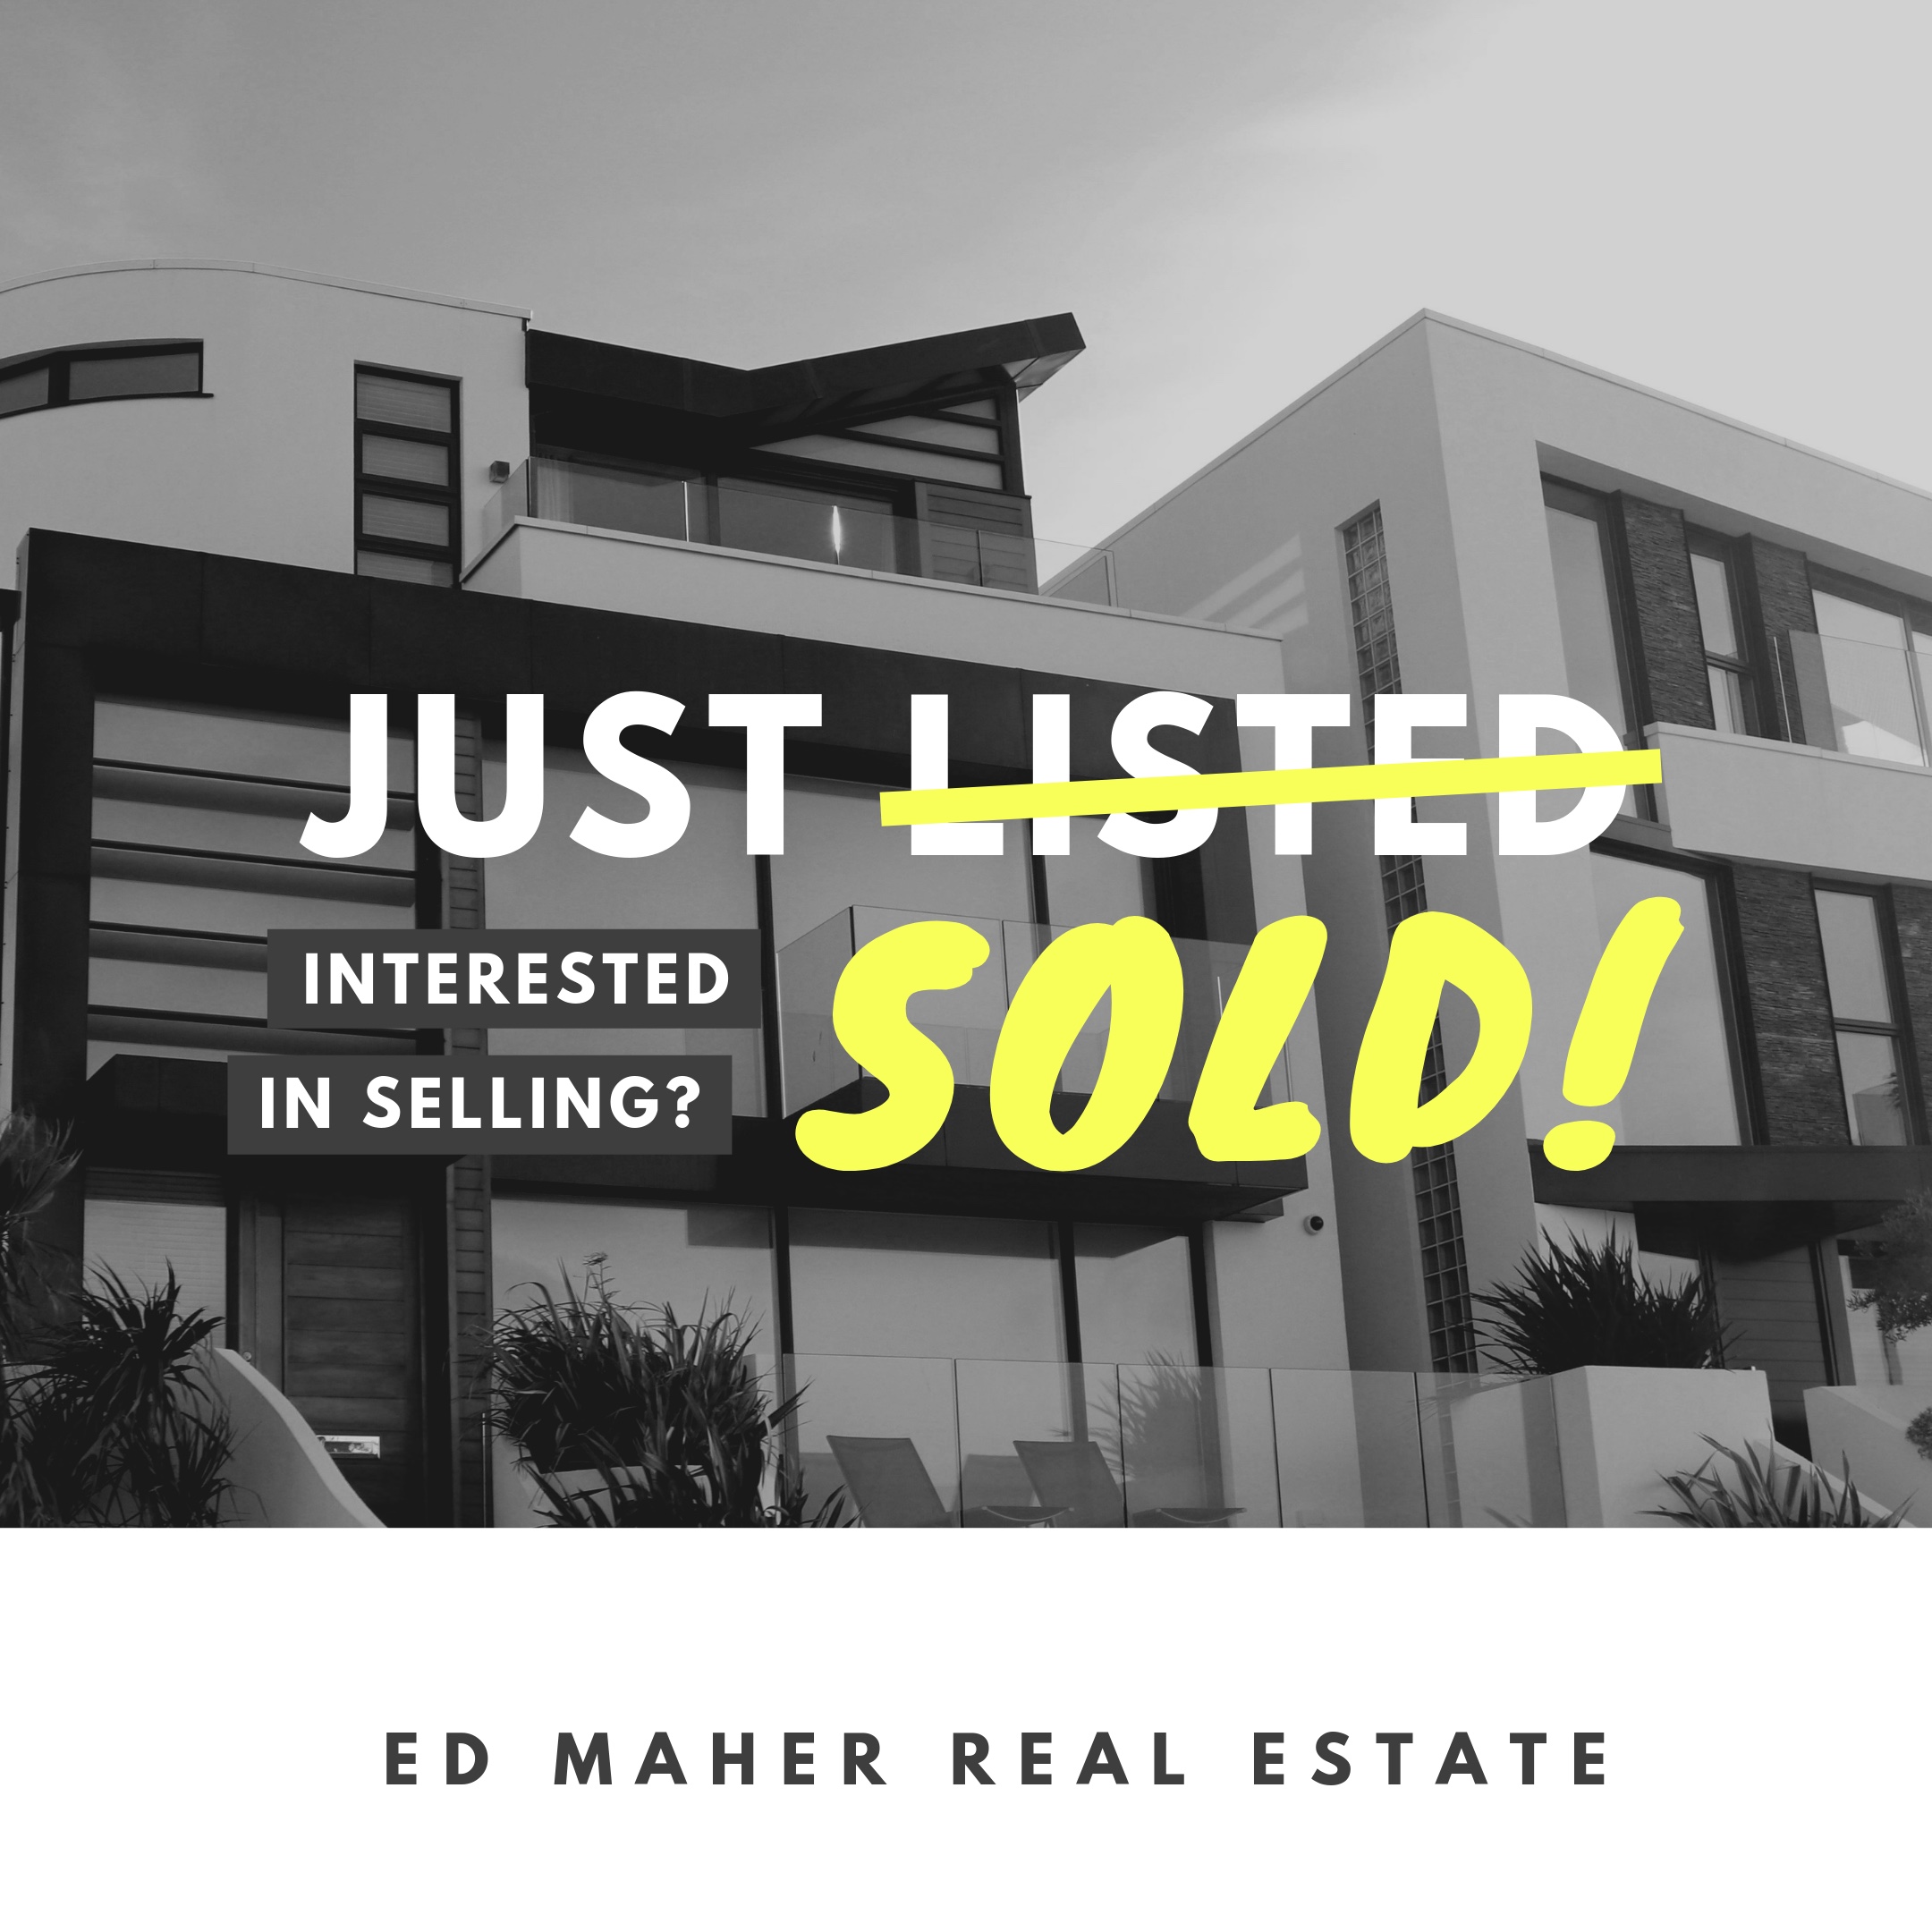 Ed Maher Real Estate